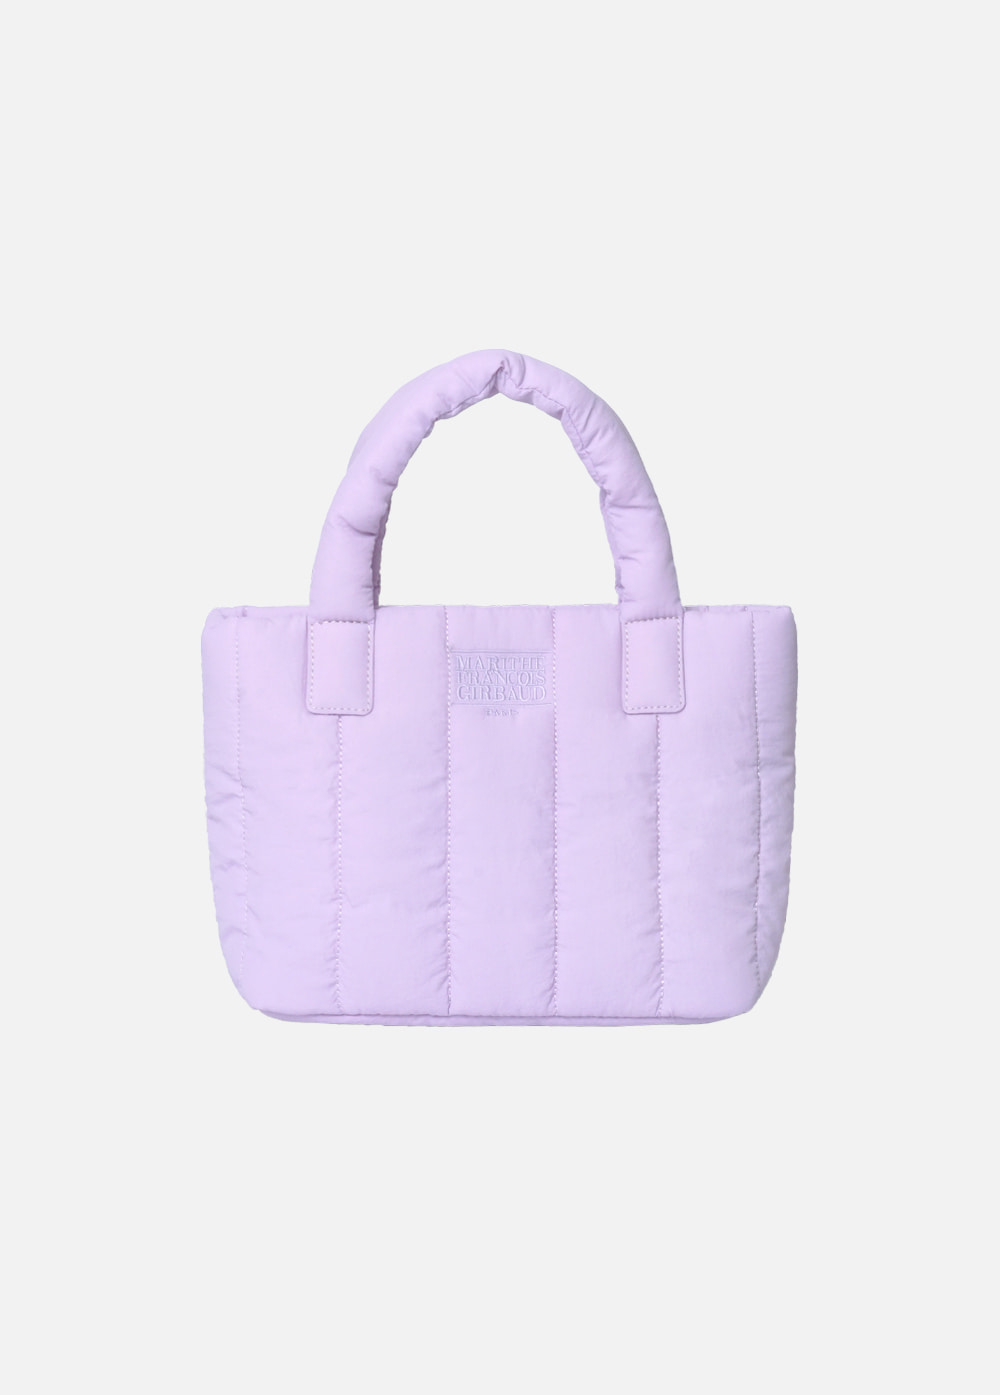 CLASSIC LOGO PADDING BAG light purple